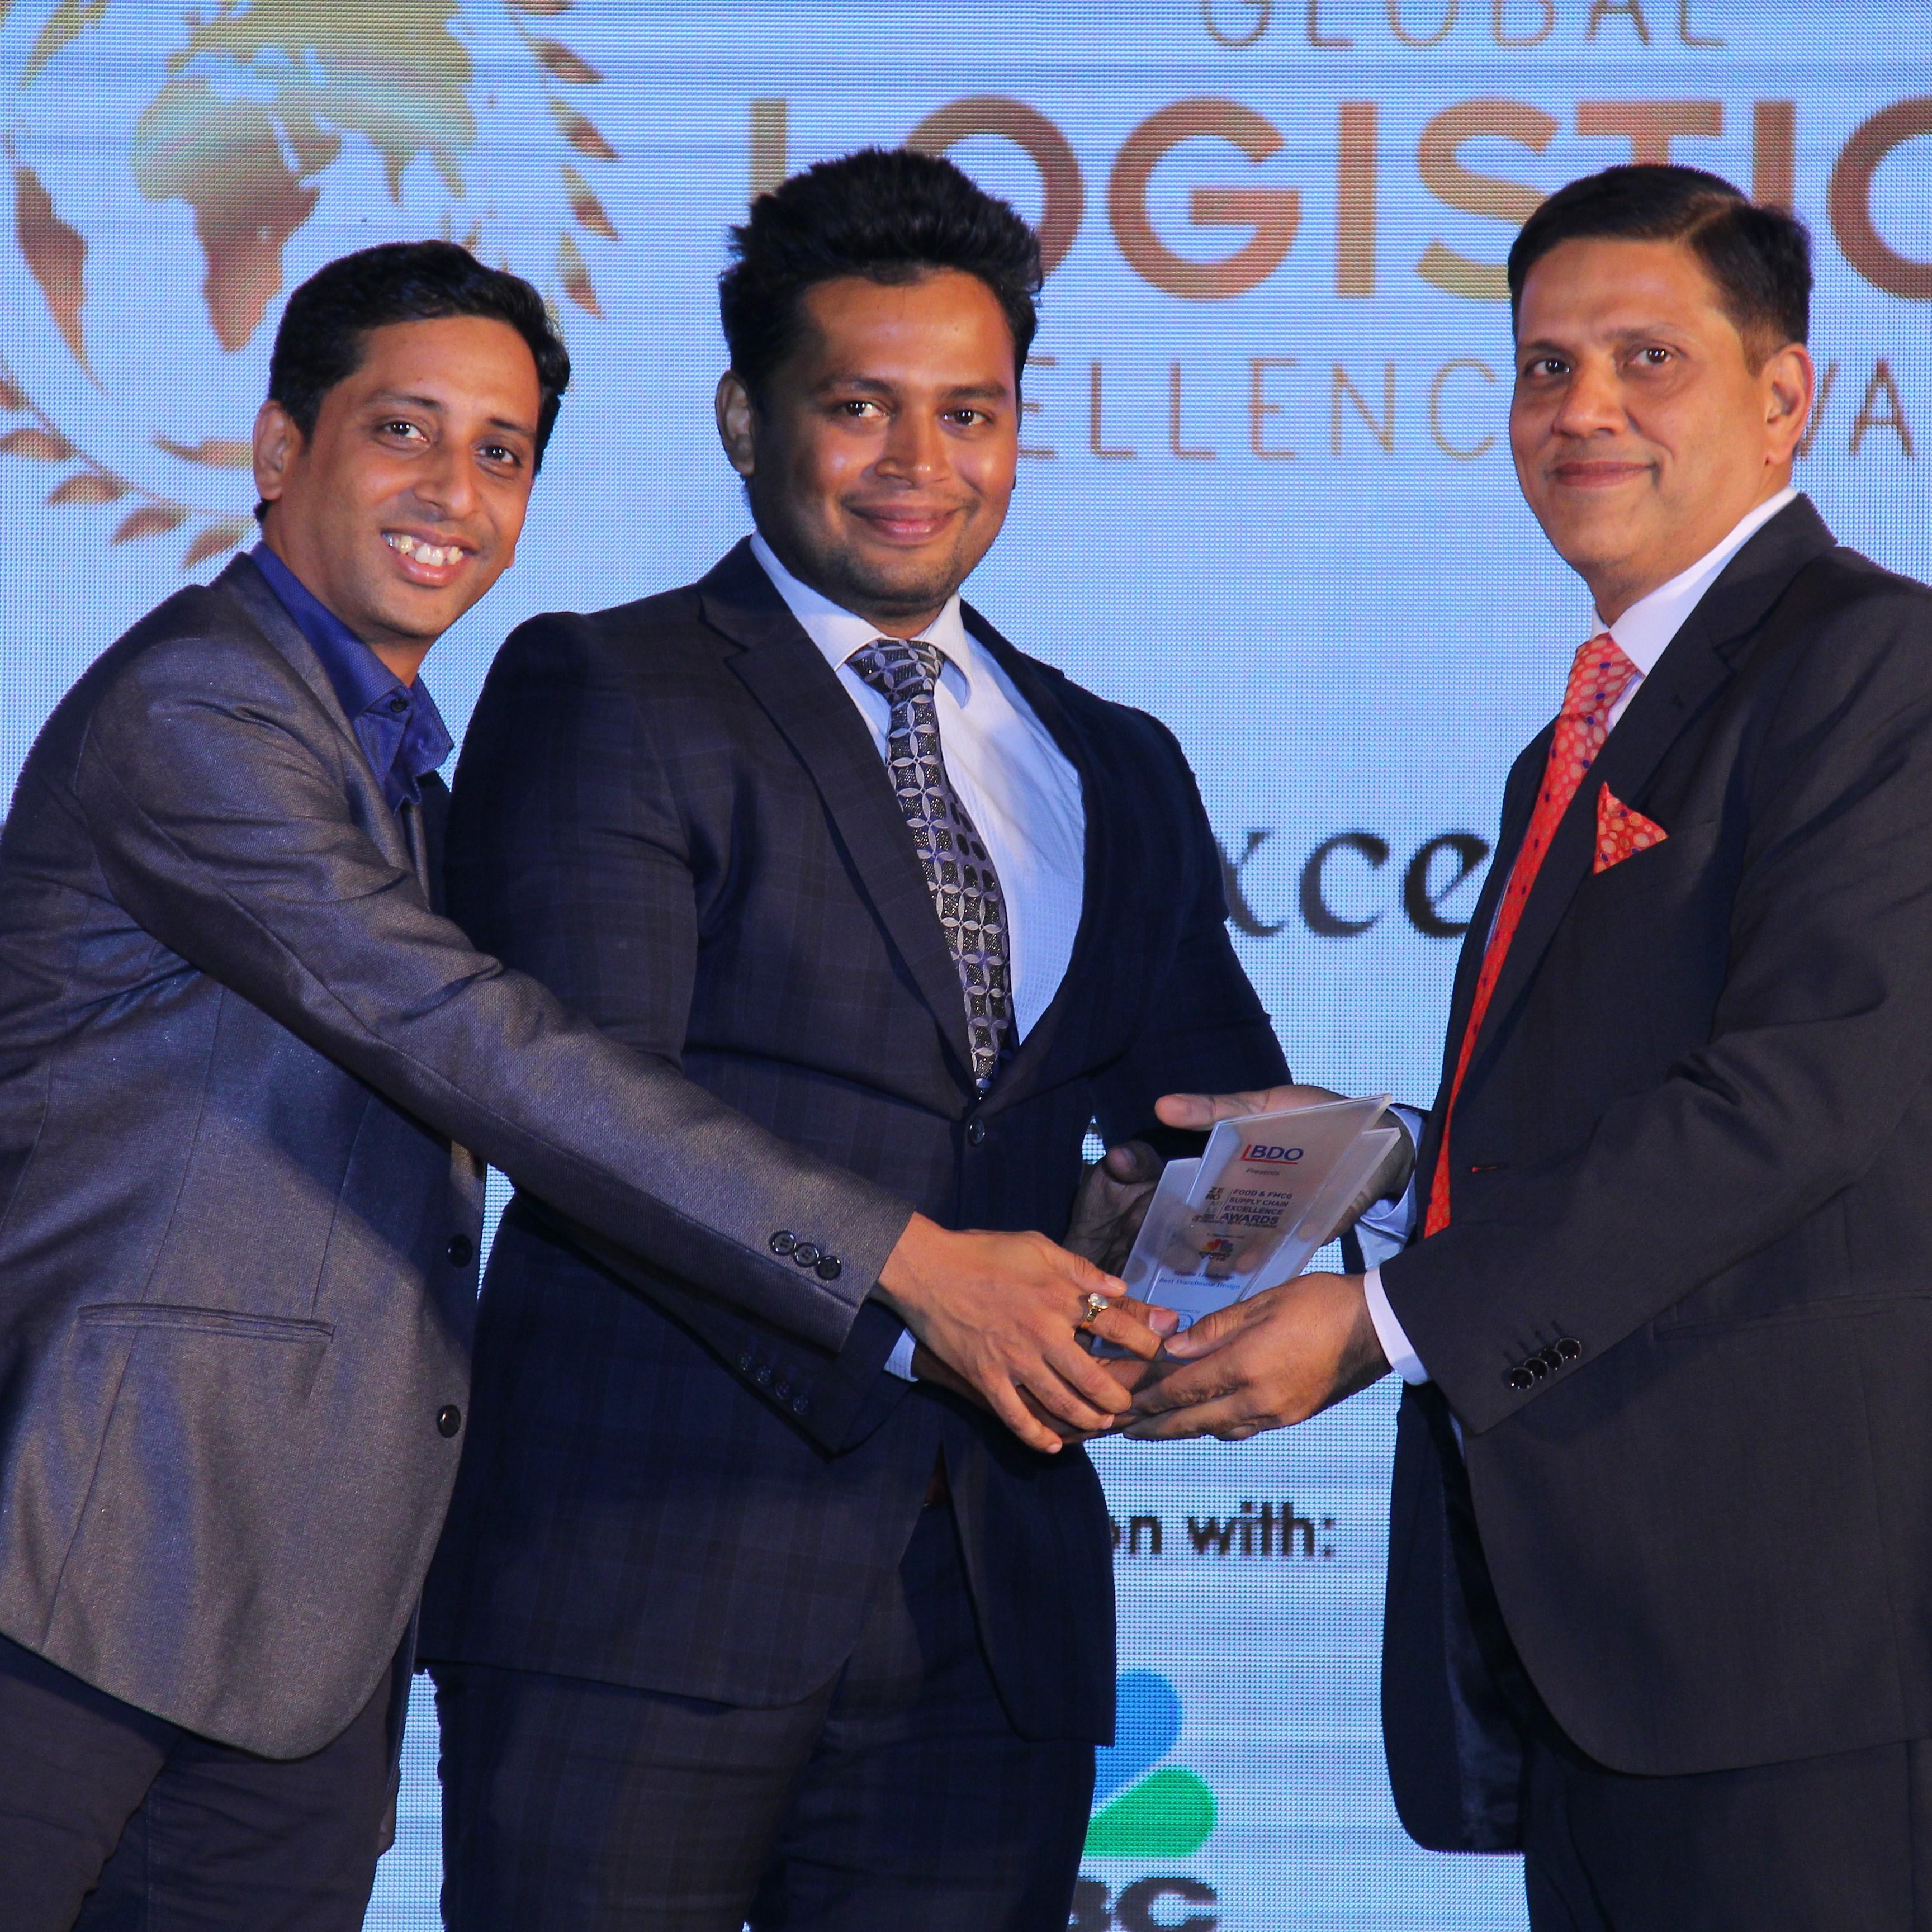 CNBC Global Logistics Award 2019